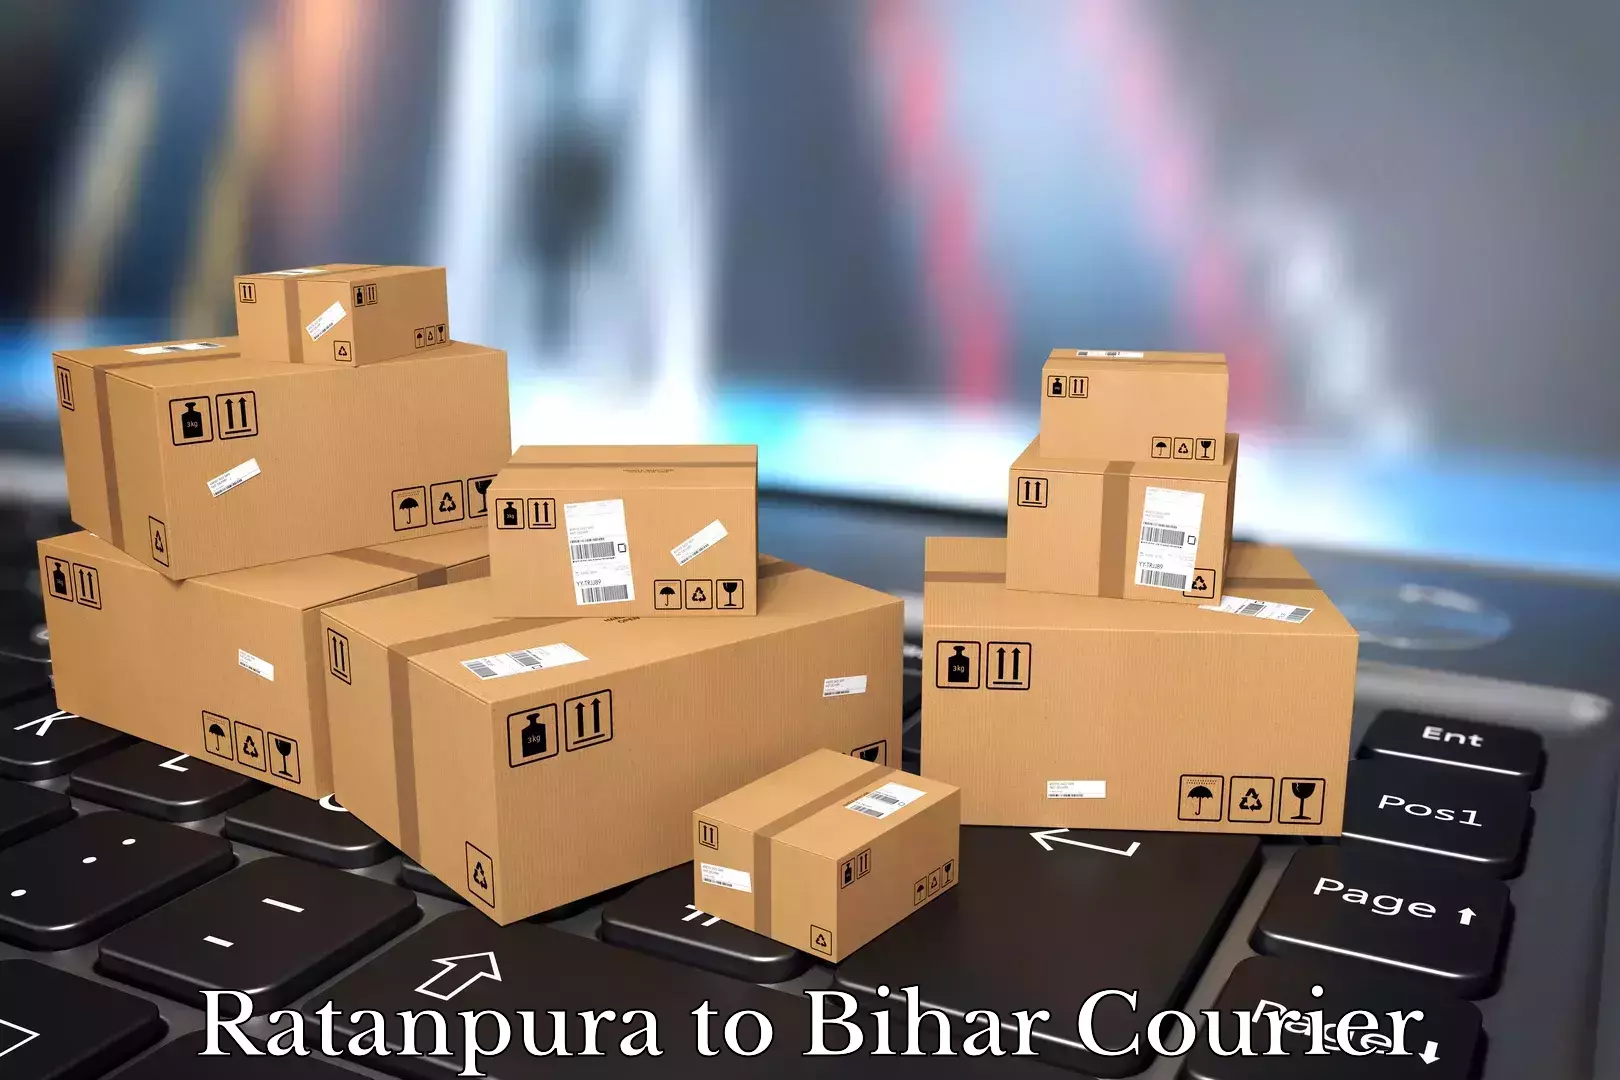 Professional moving company Ratanpura to Bihar